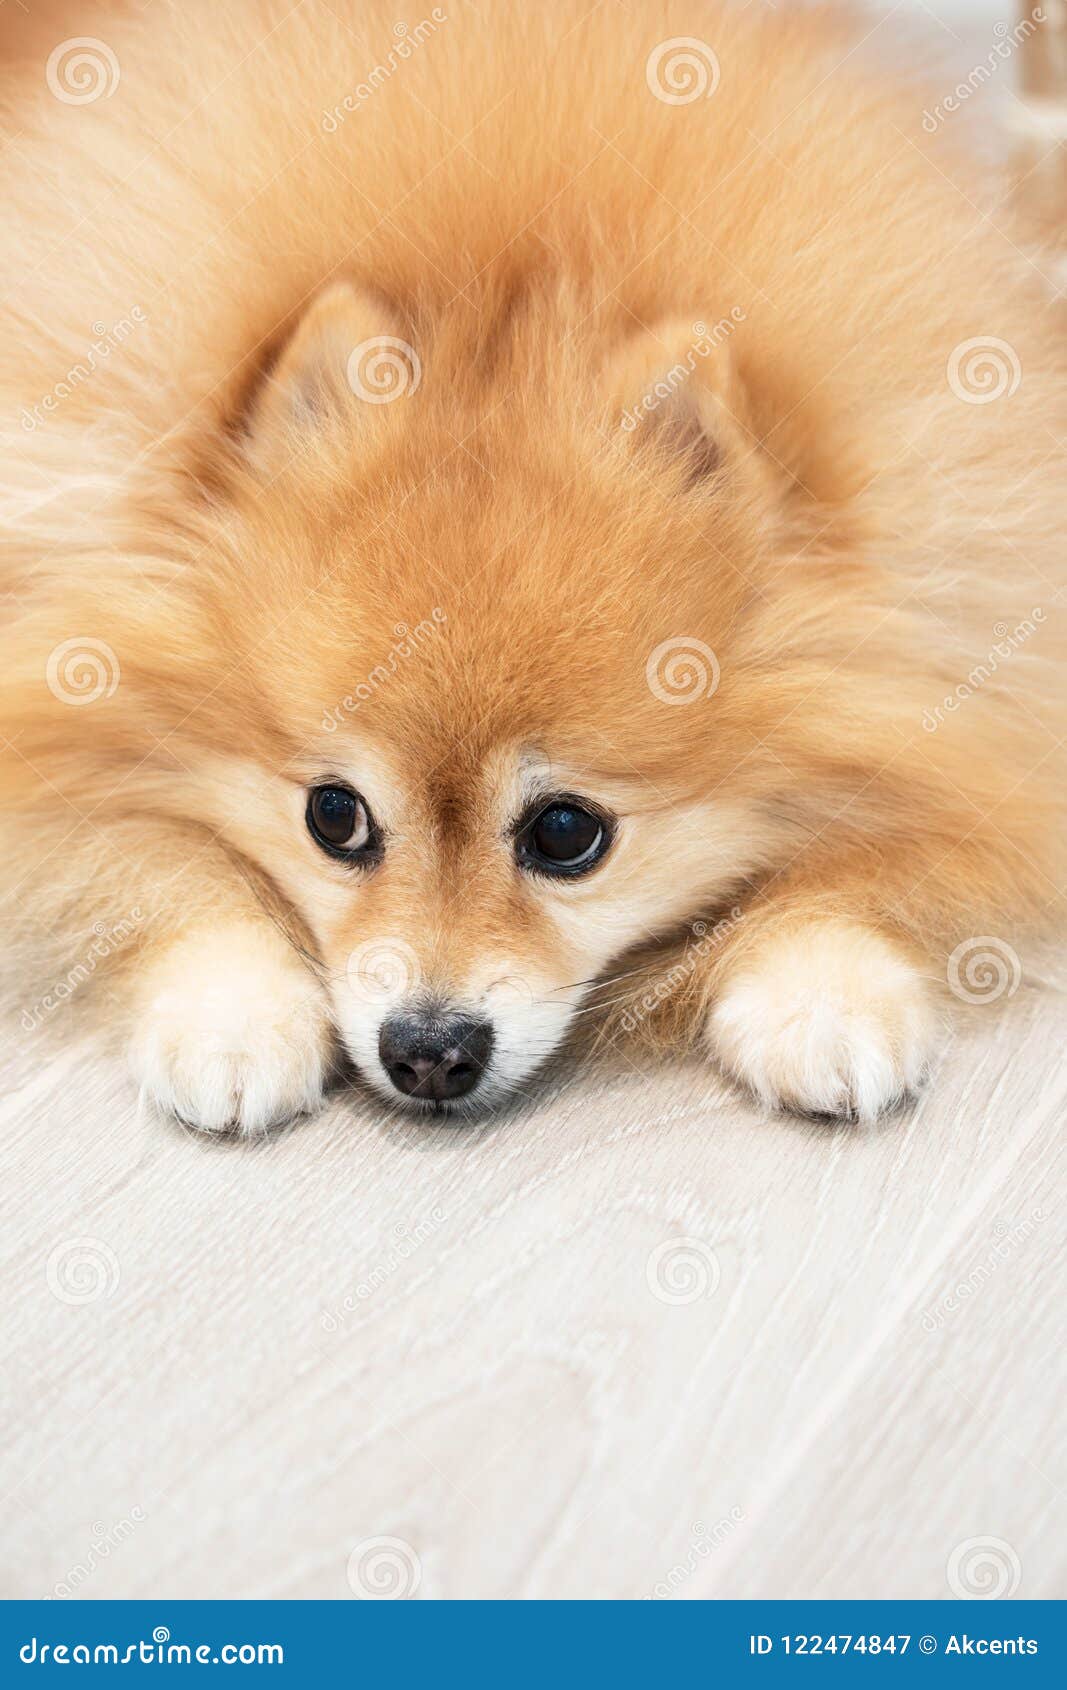 Reddish Golden Pomeranian Dog Sitting On The Laminate Wood Floor